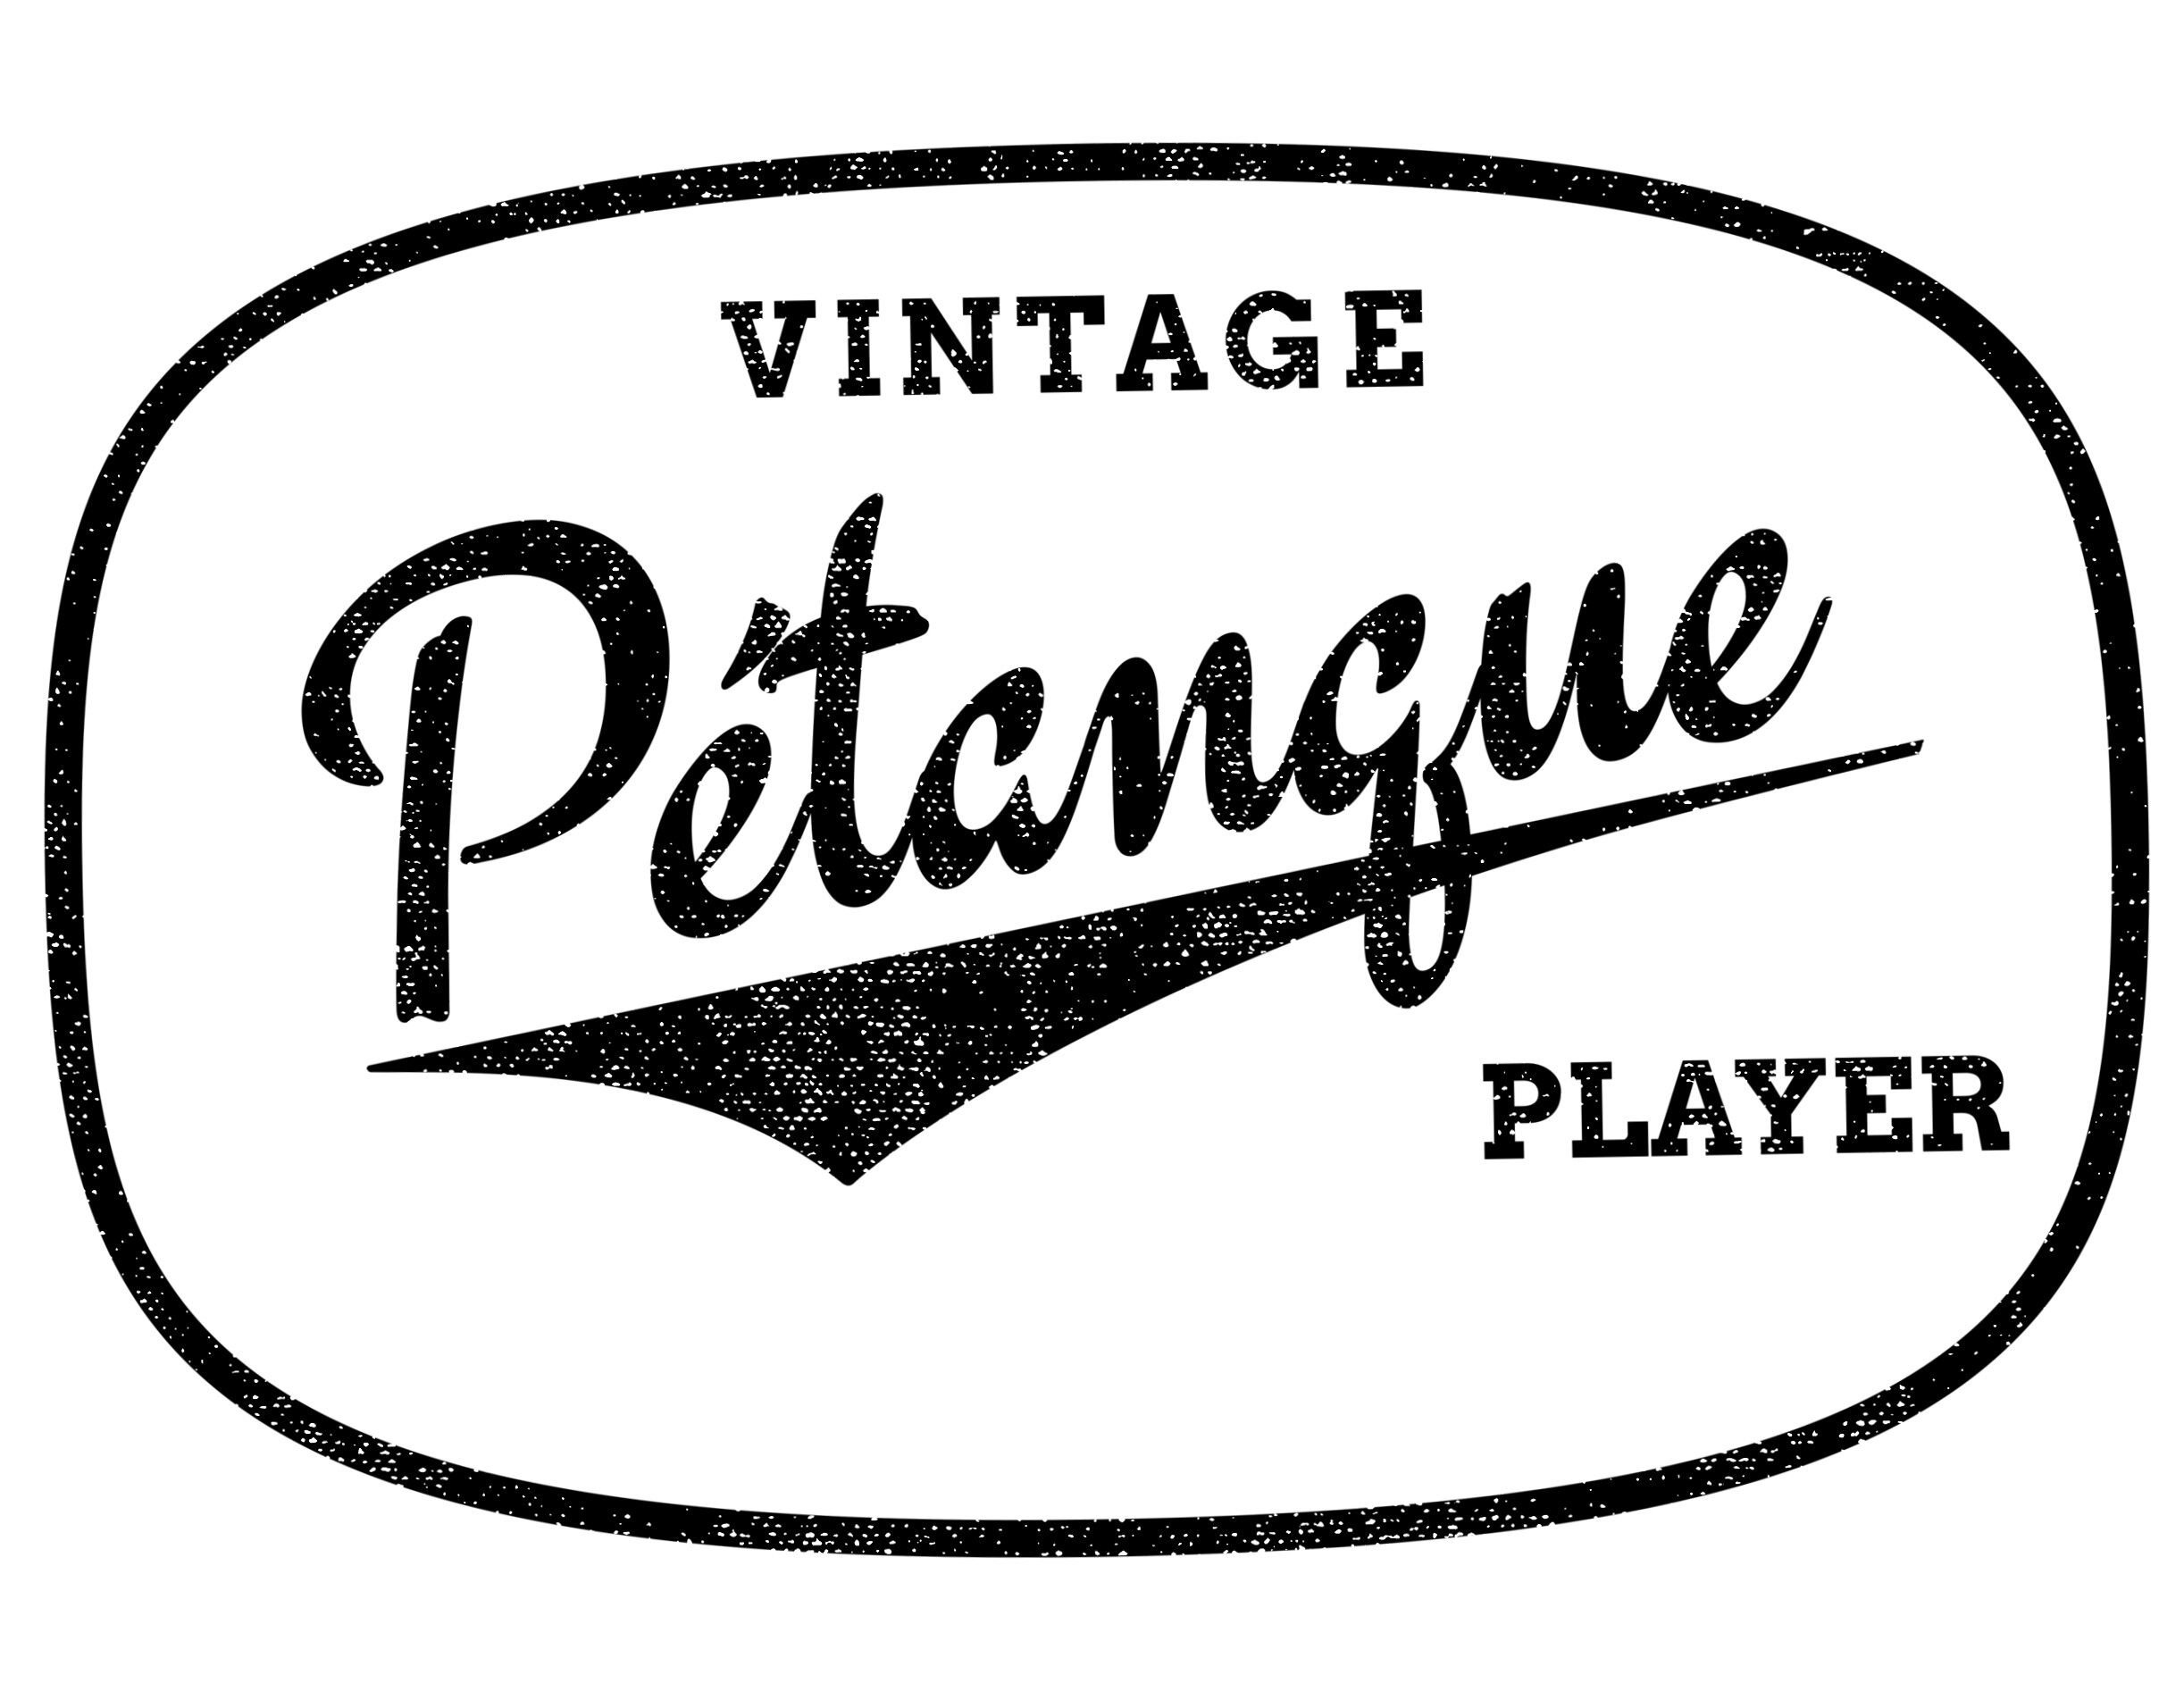 04_Vintage+Petanque+Player.jpg